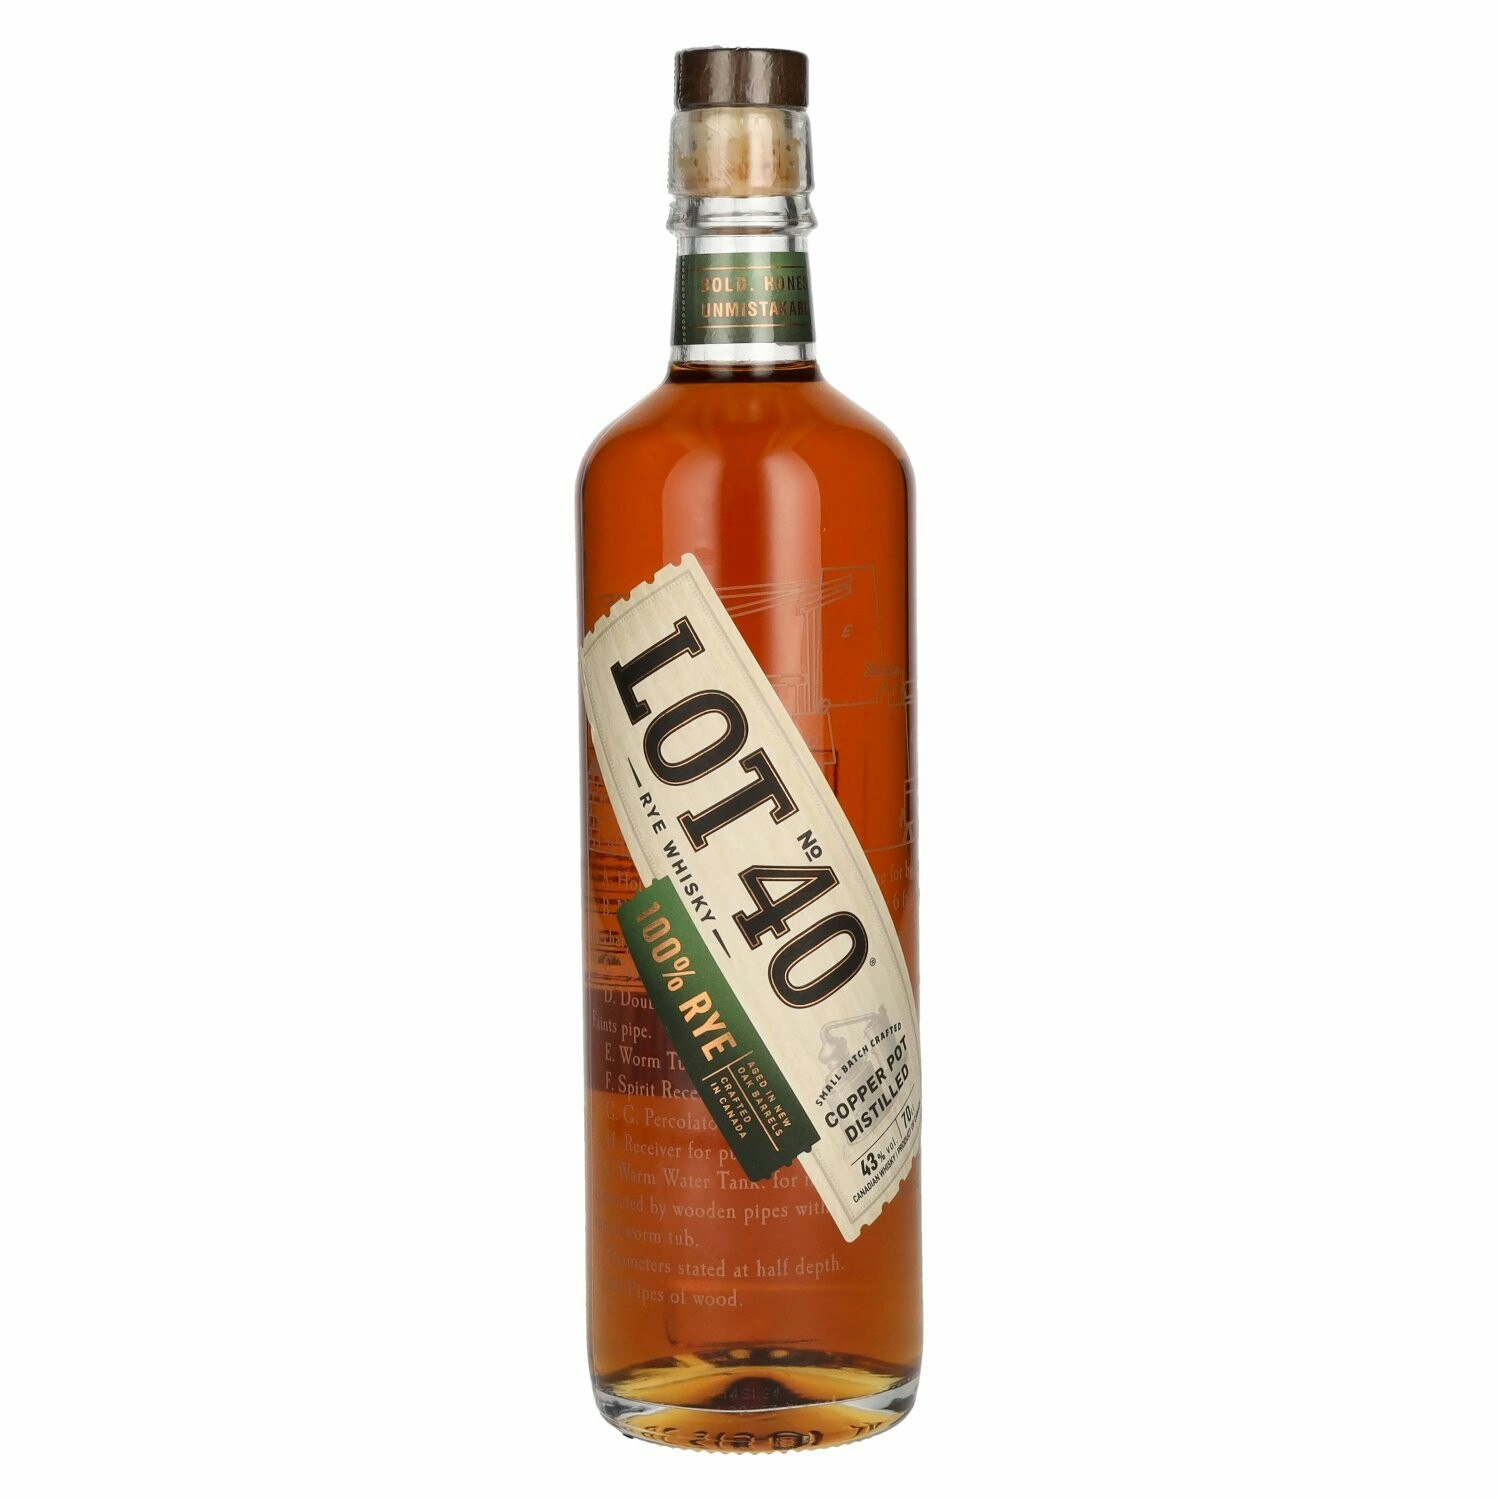 LOT No. 40 Canadian Rye Whisky 43% Vol. 0,7l